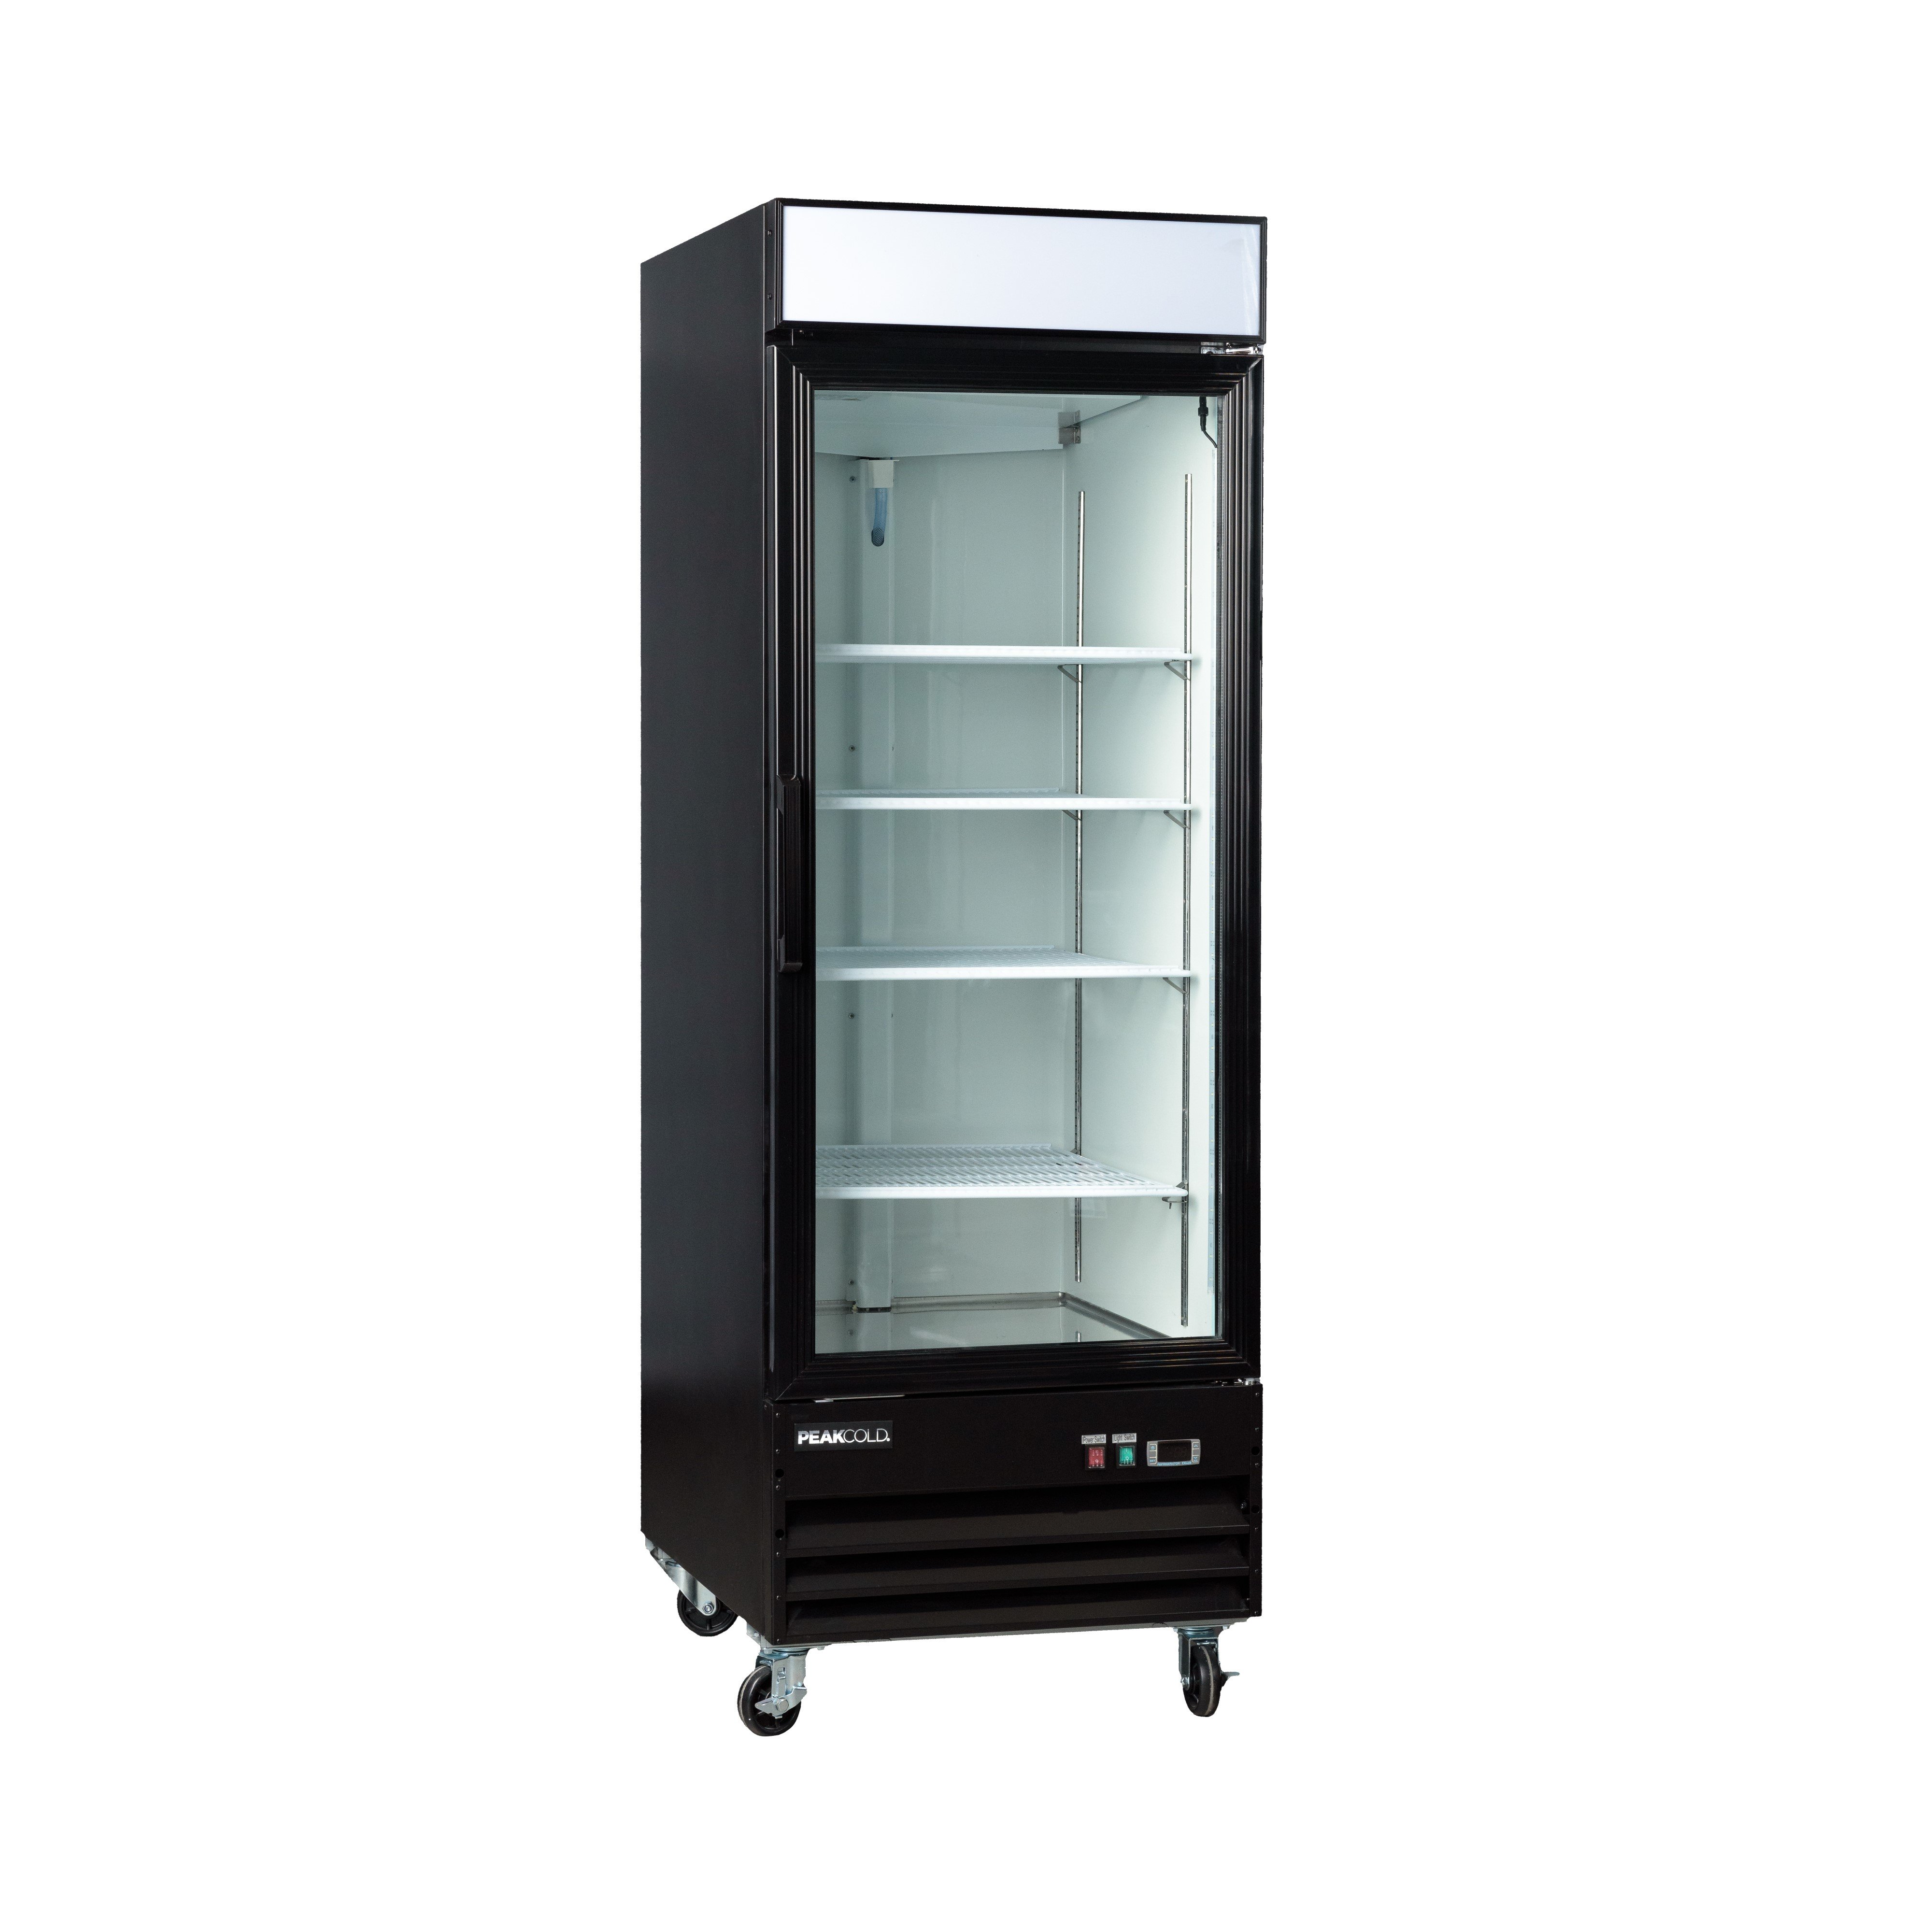 PeakCold glass refrigerator Upright Display Cooler - 23 CU Ft.